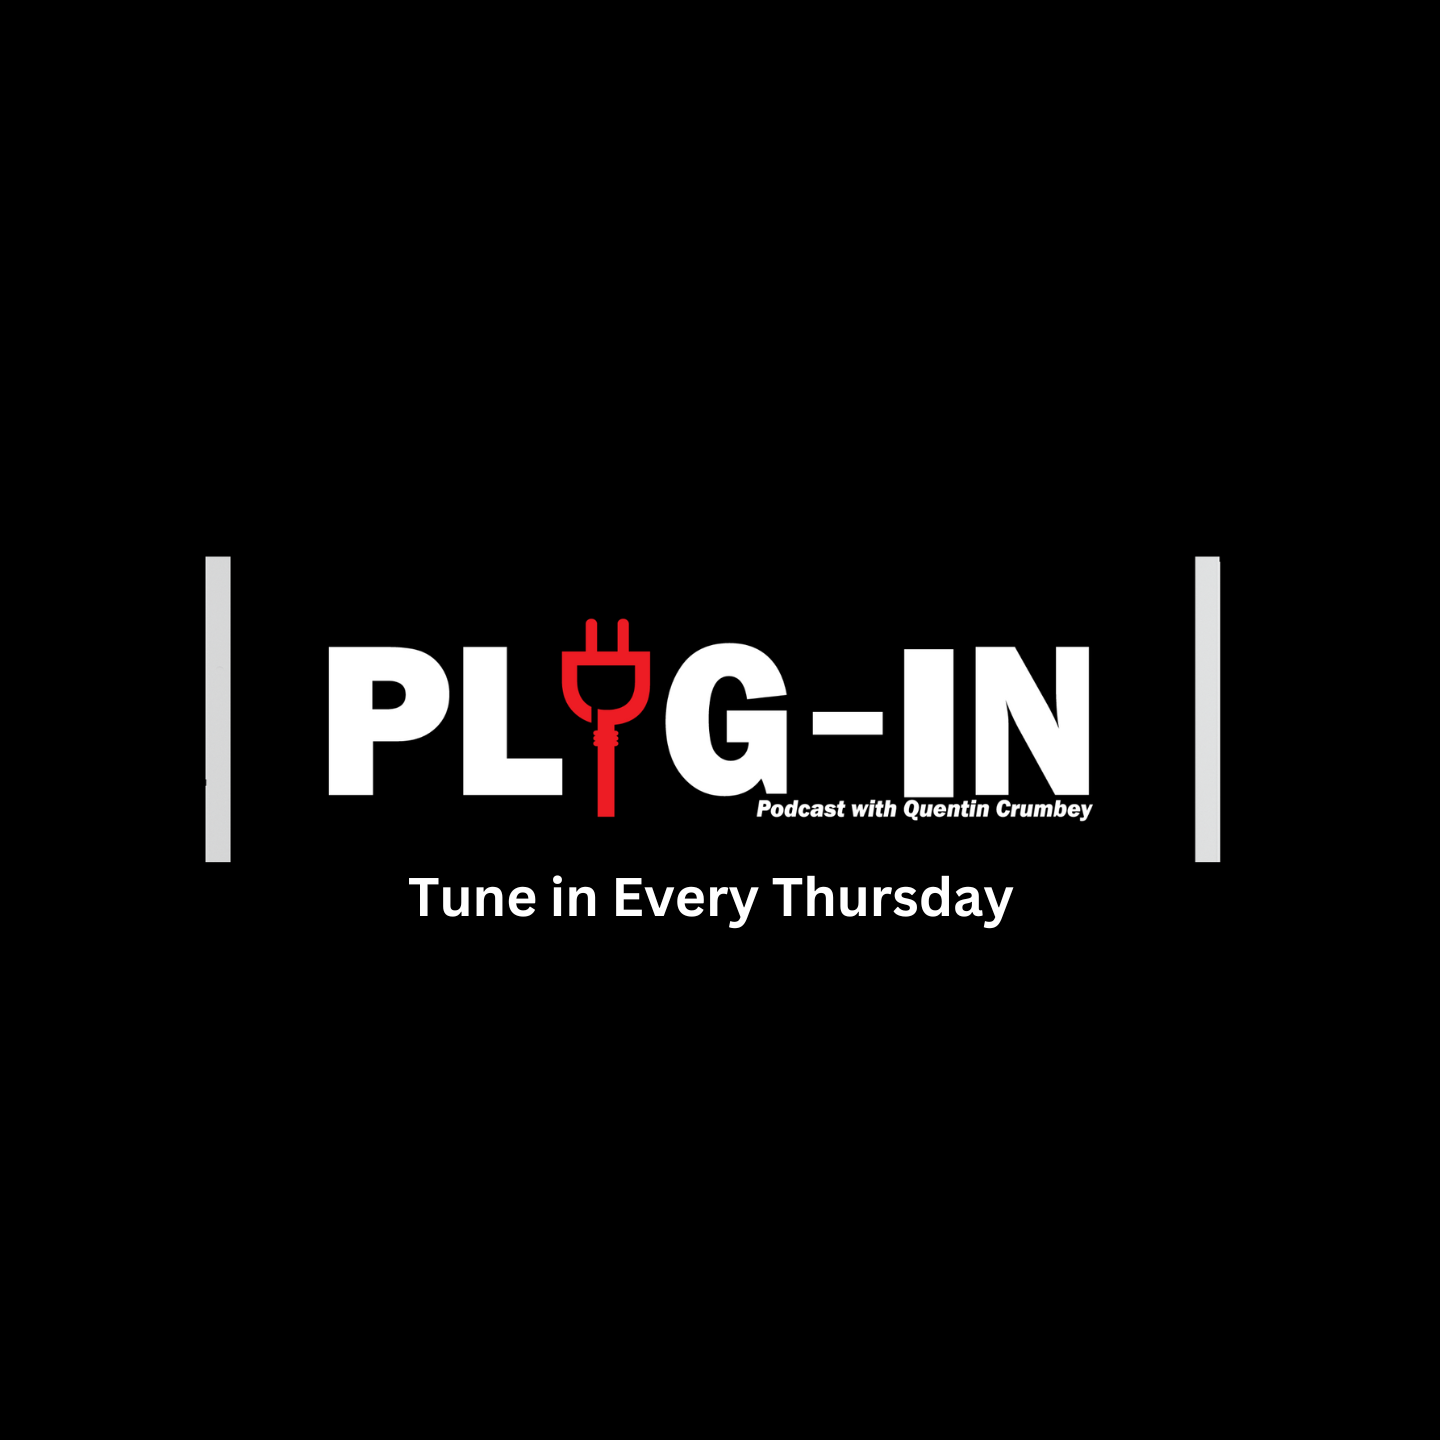 PLUG-IN Podcast